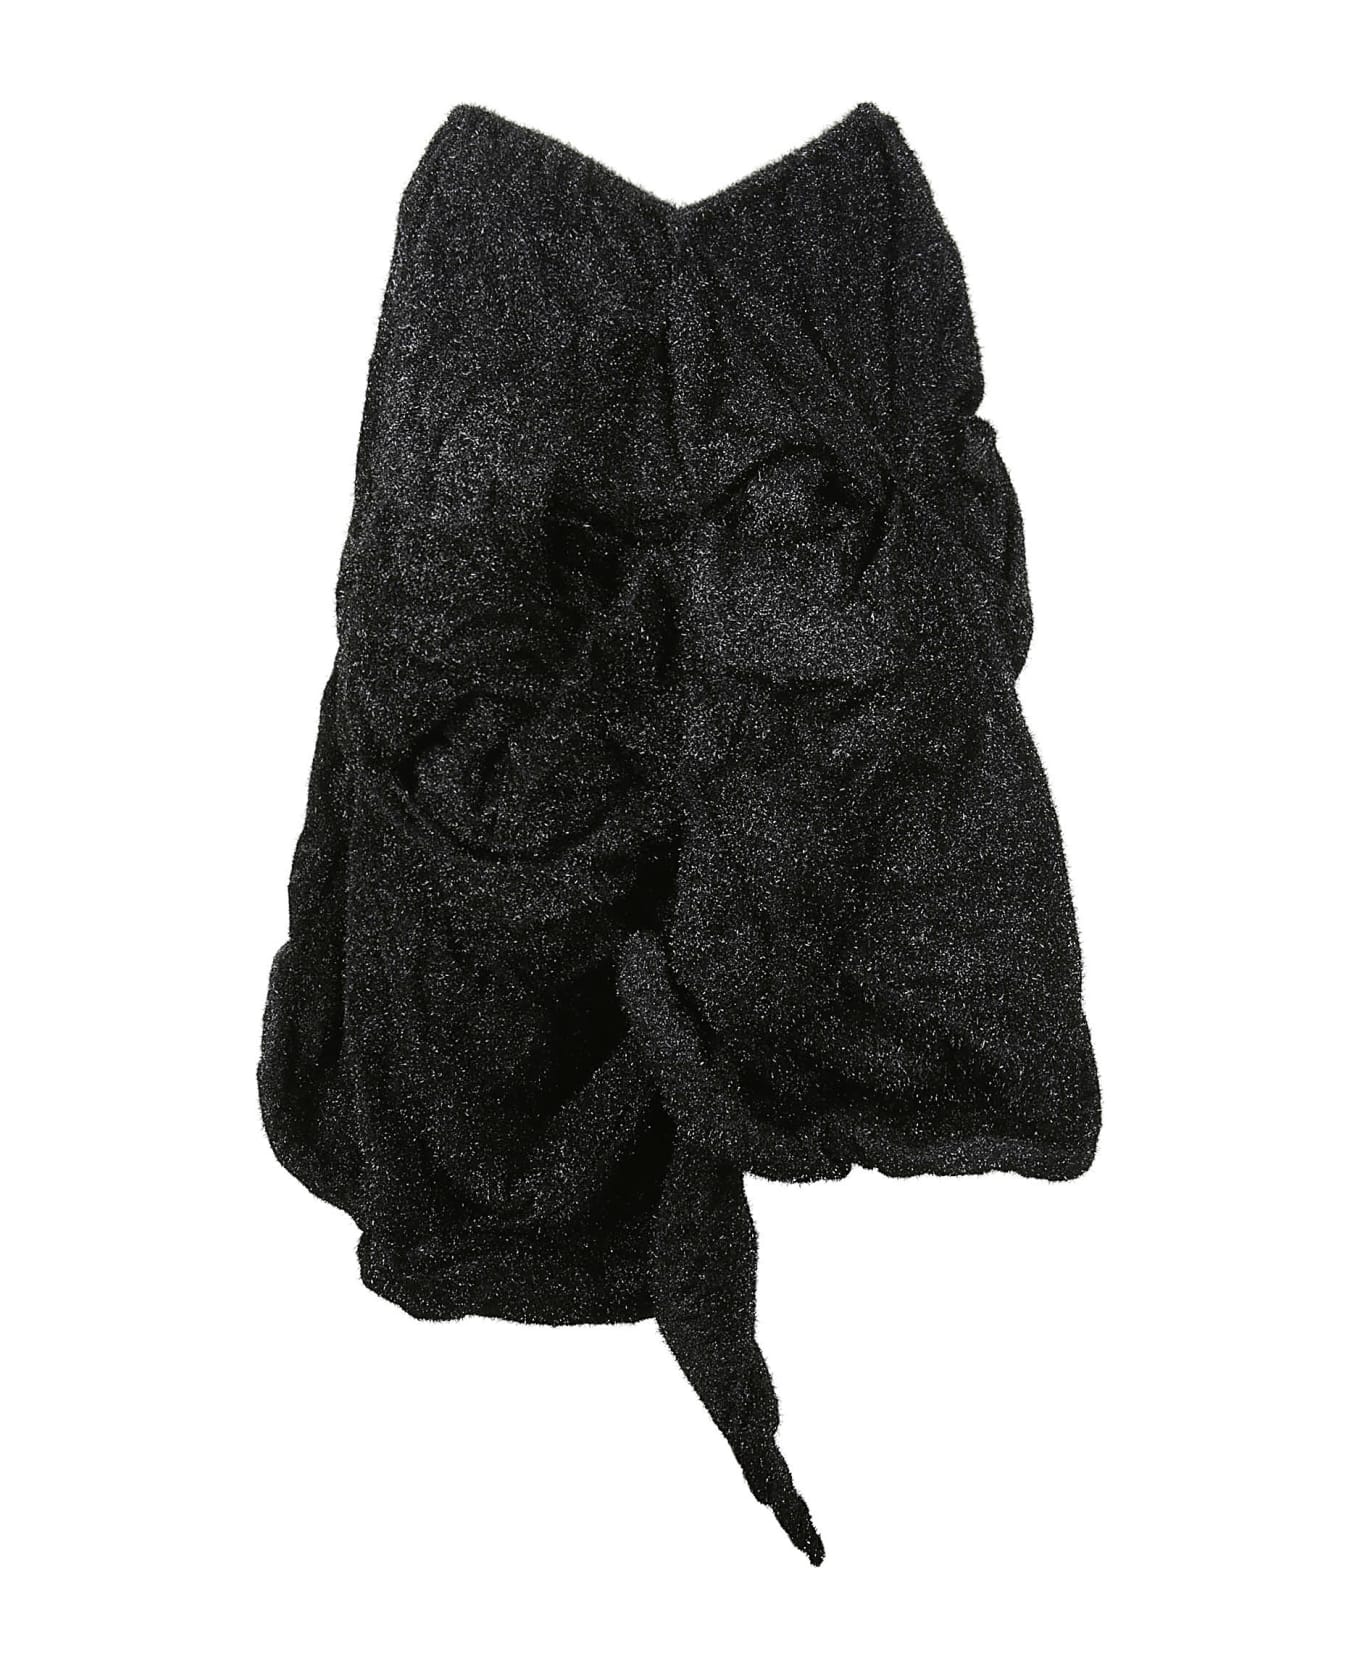 A. Roege Hove Laura Drape Skirt - BLACK